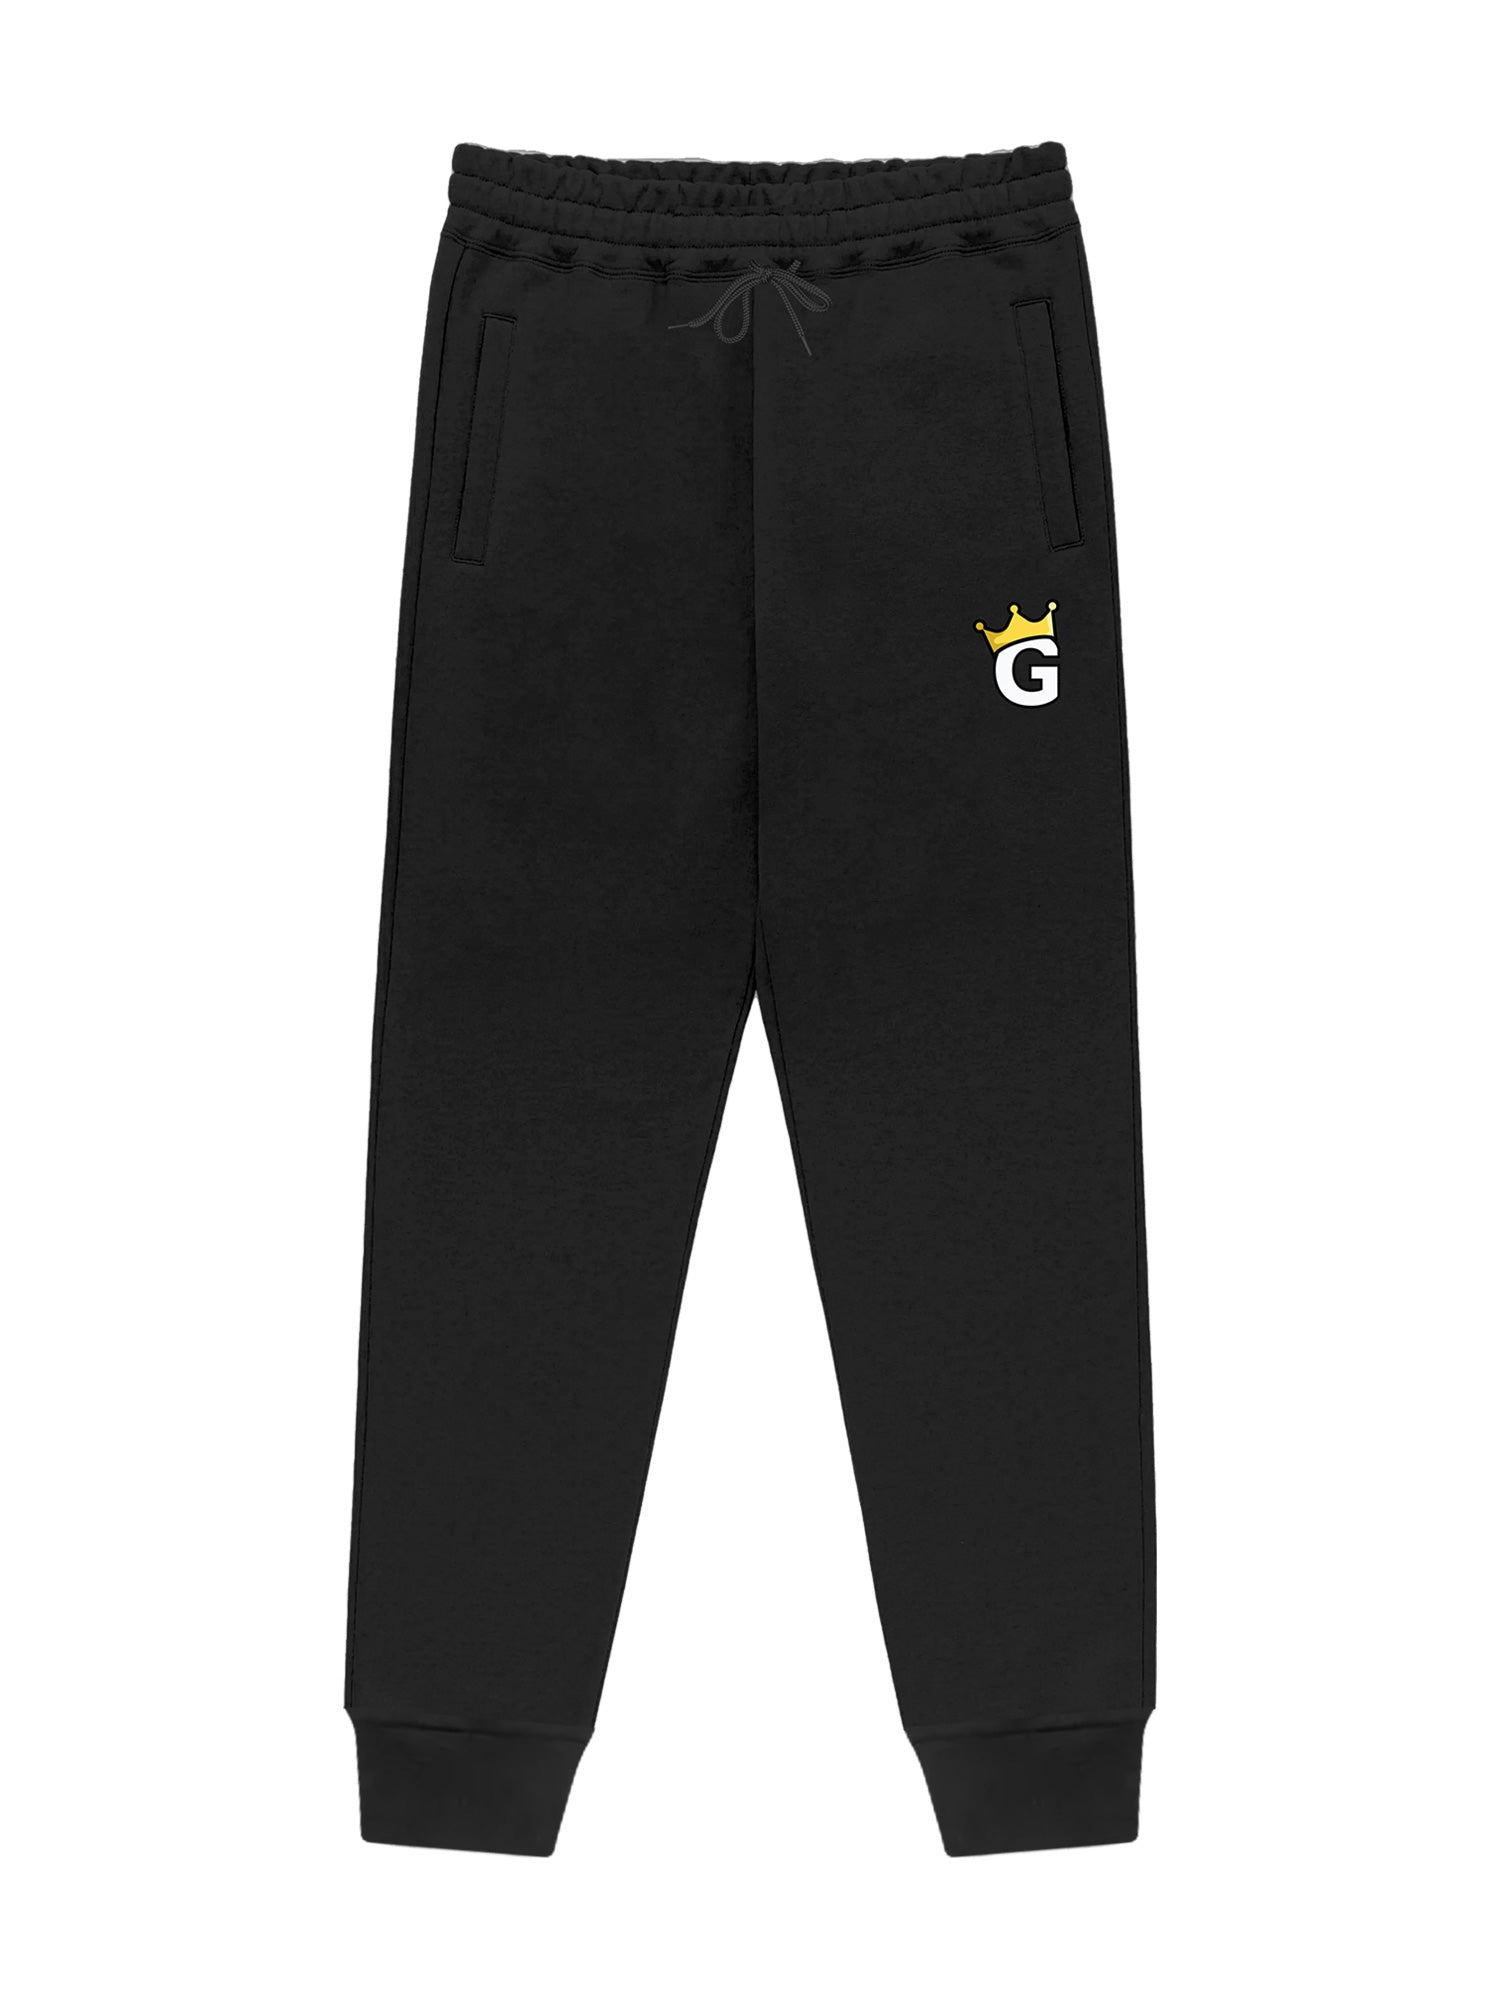 Crown Black Sweatpants